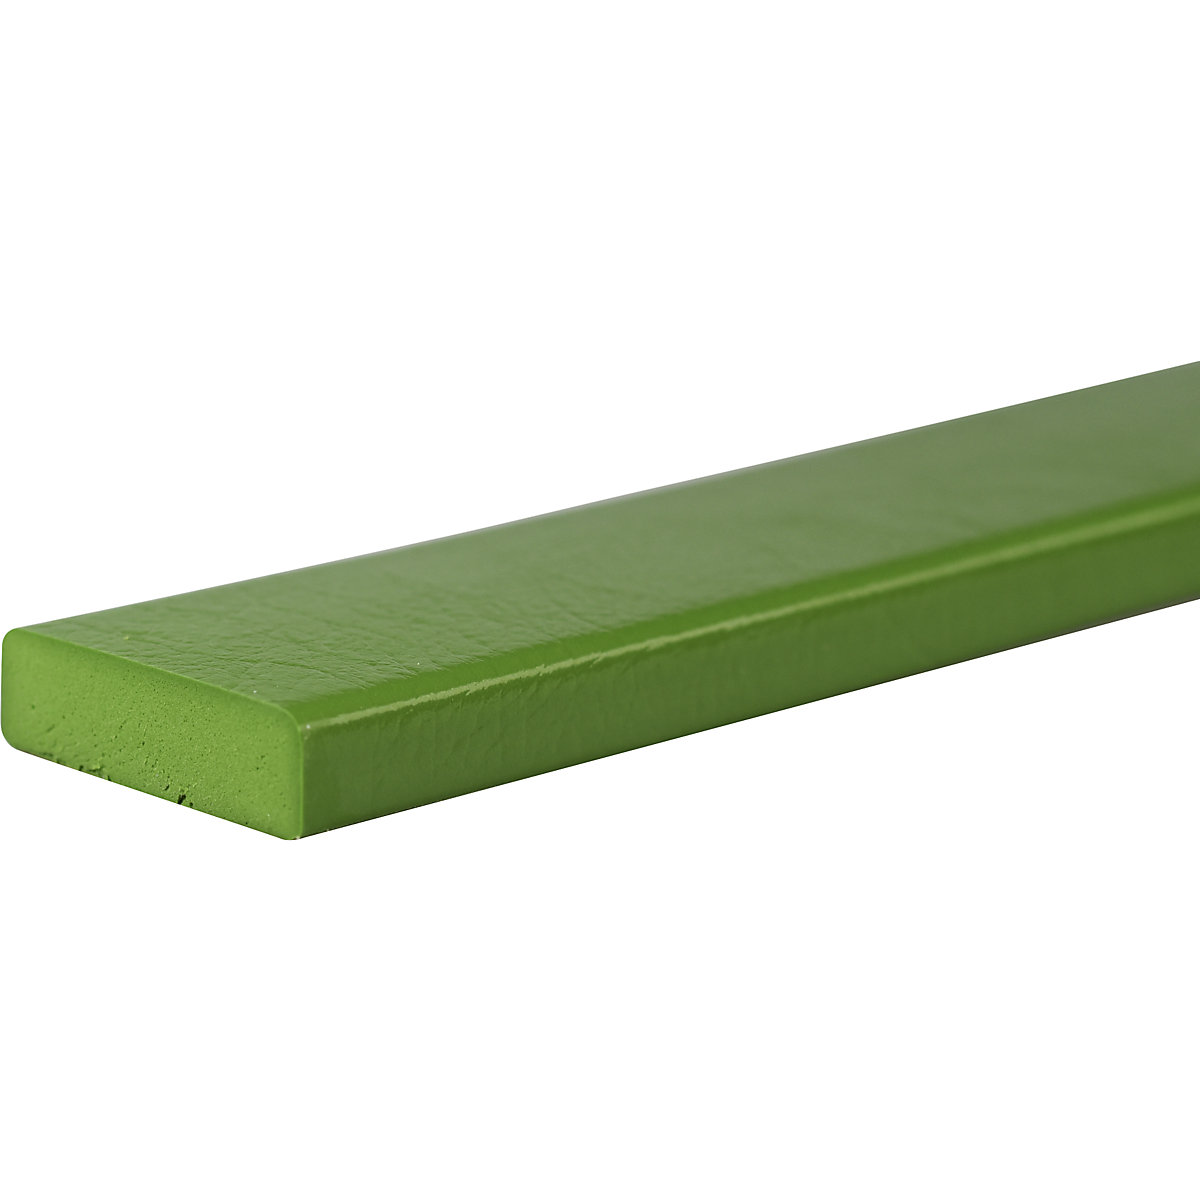 Knuffi®-oppervlaktebescherming – SHG, type S, stuk van 1 m, groen-23